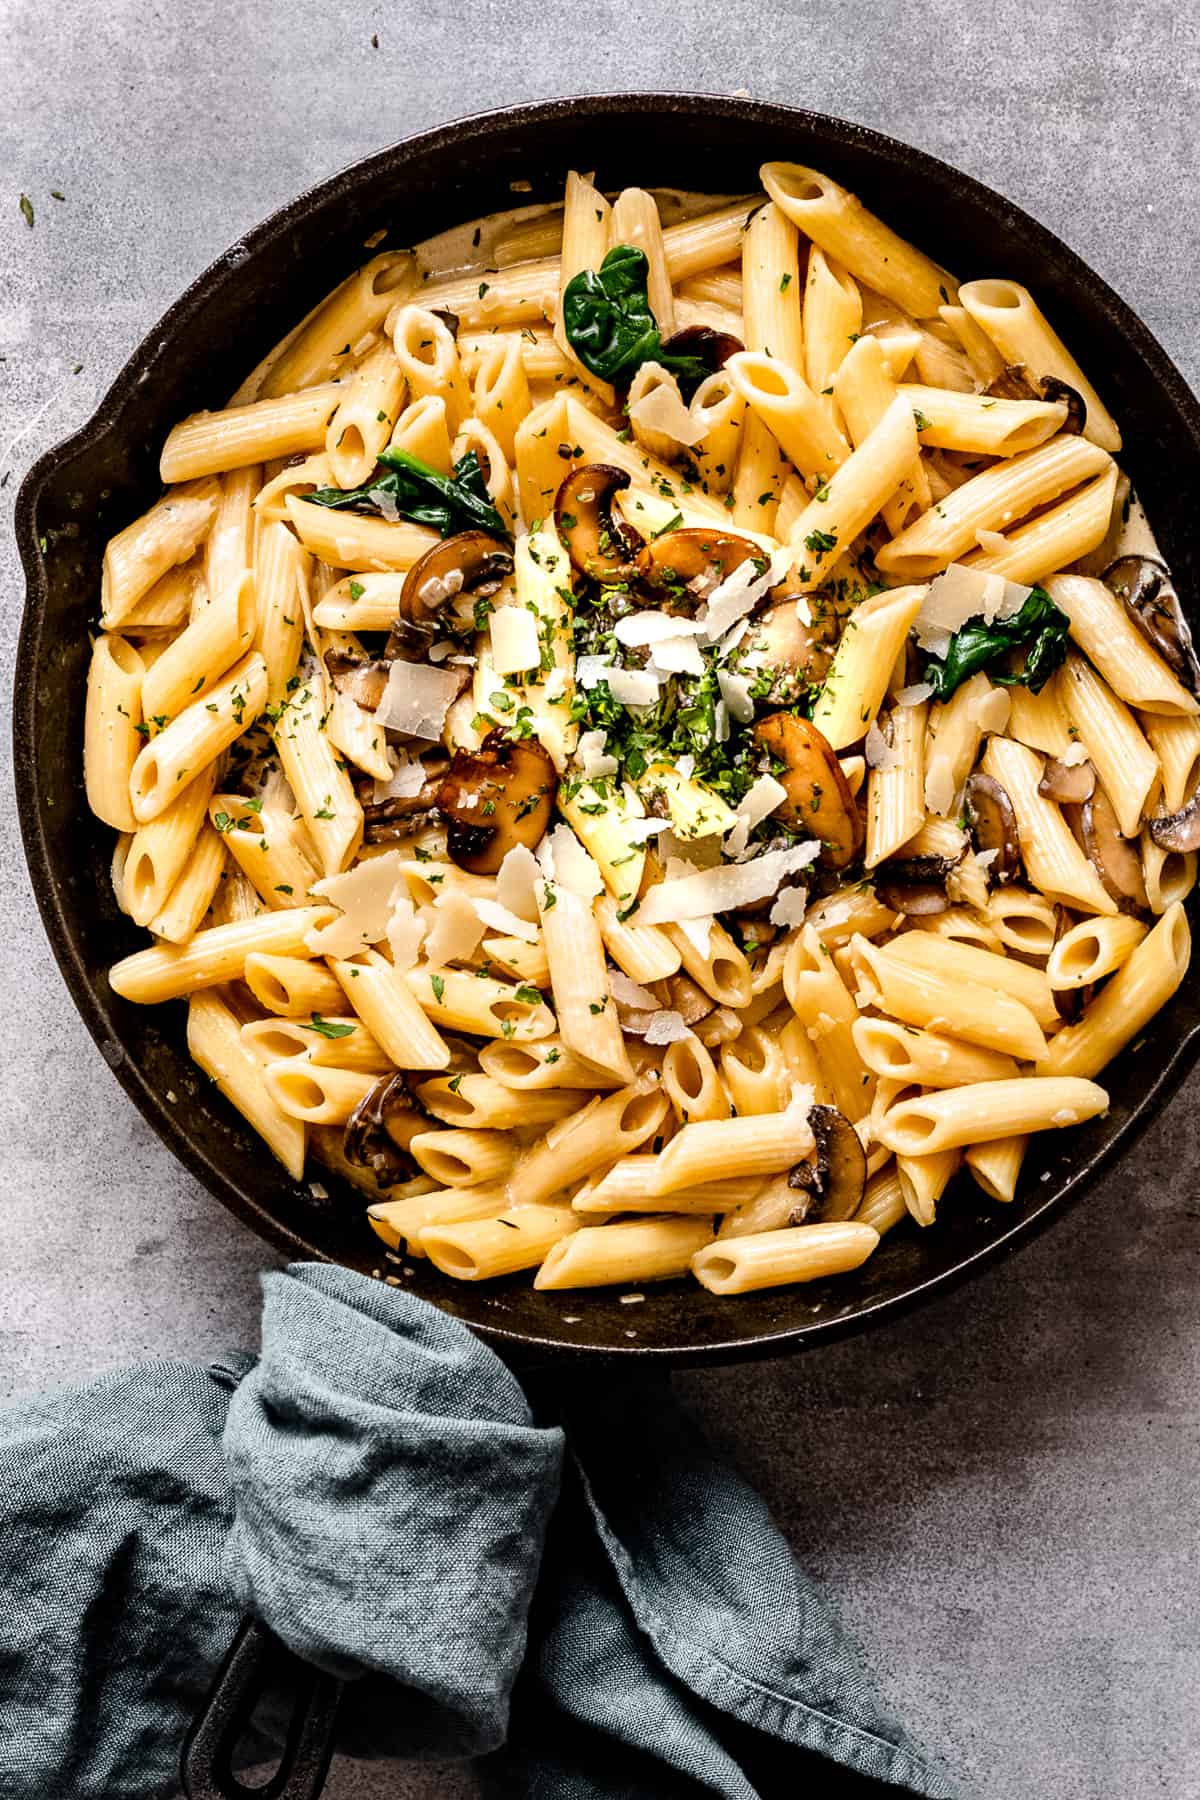 Lighter healthier mushroom pasta with parsley.